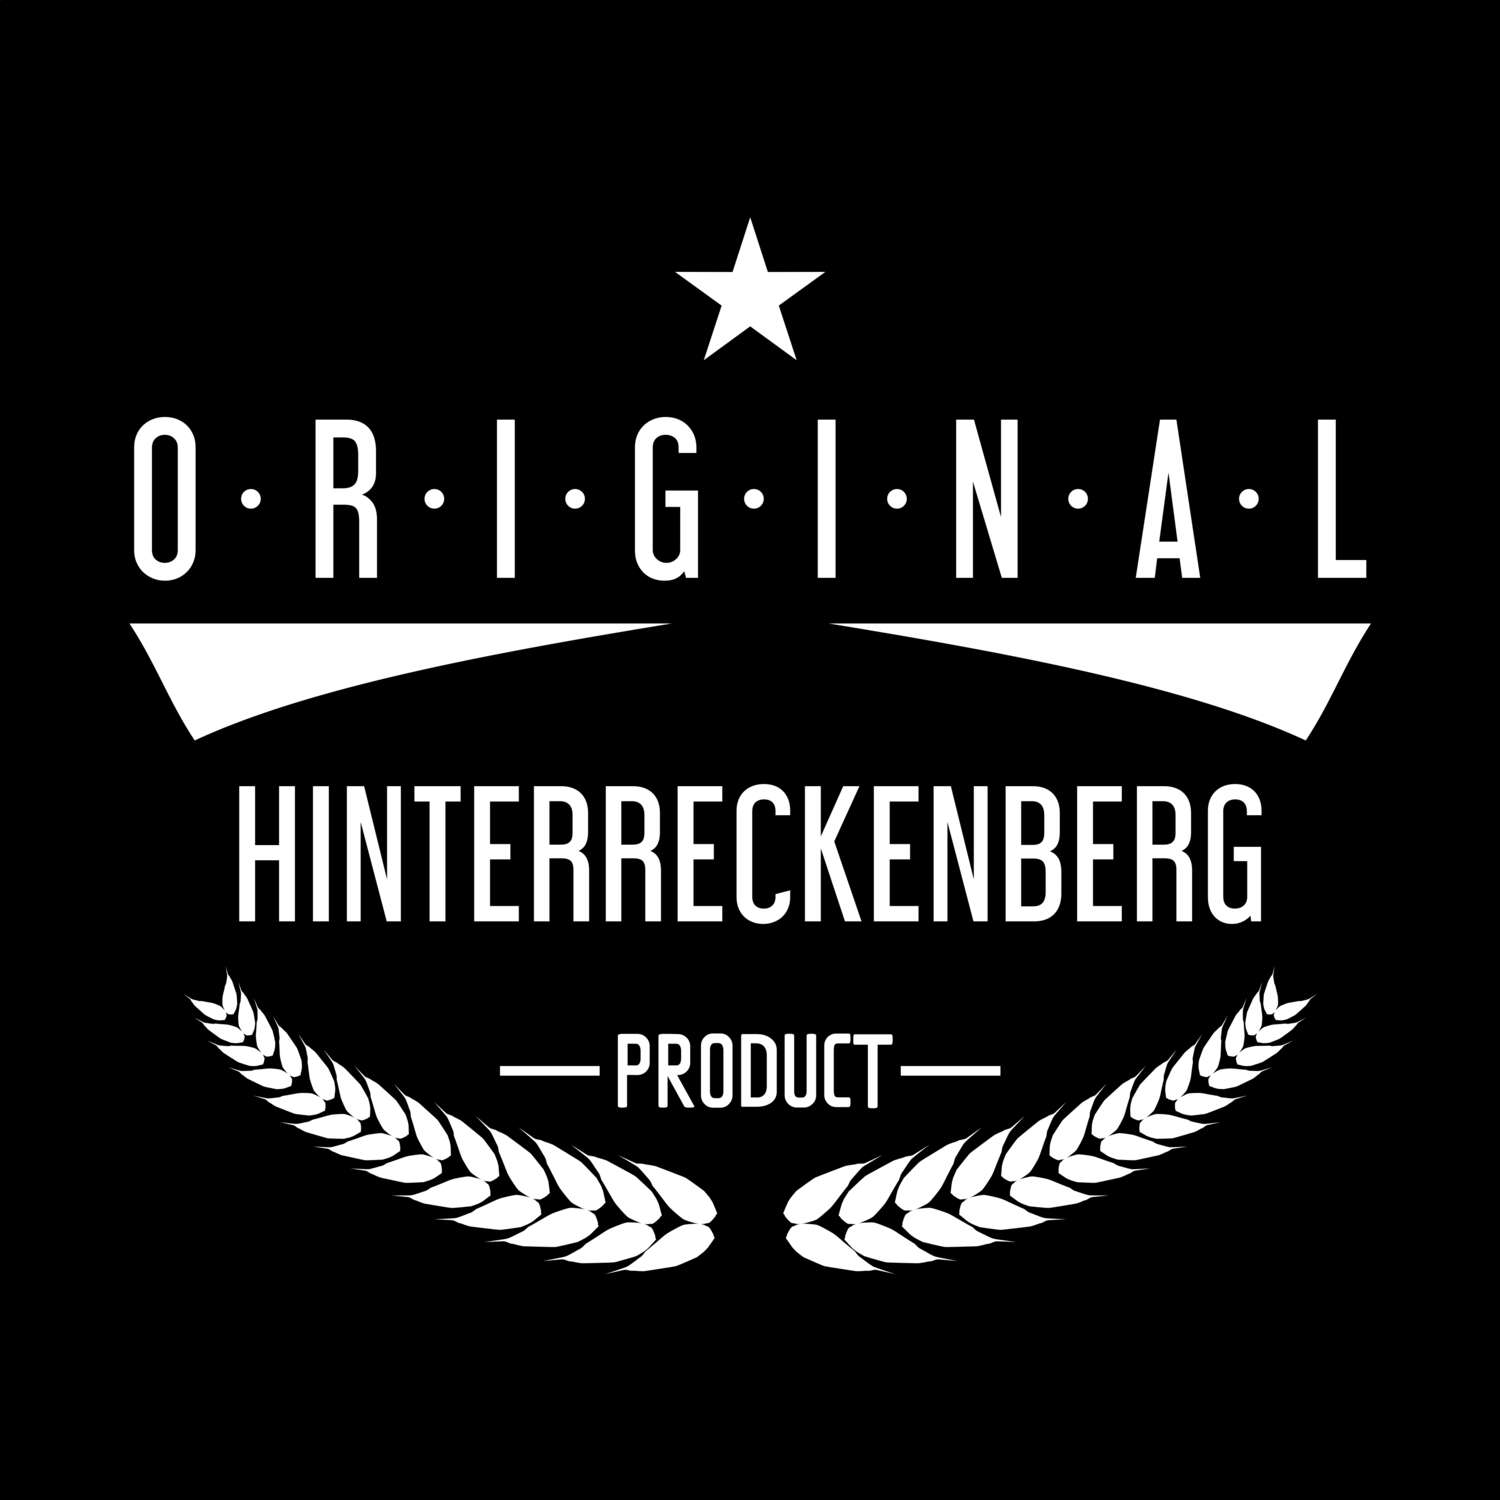 Hinterreckenberg T-Shirt »Original Product«